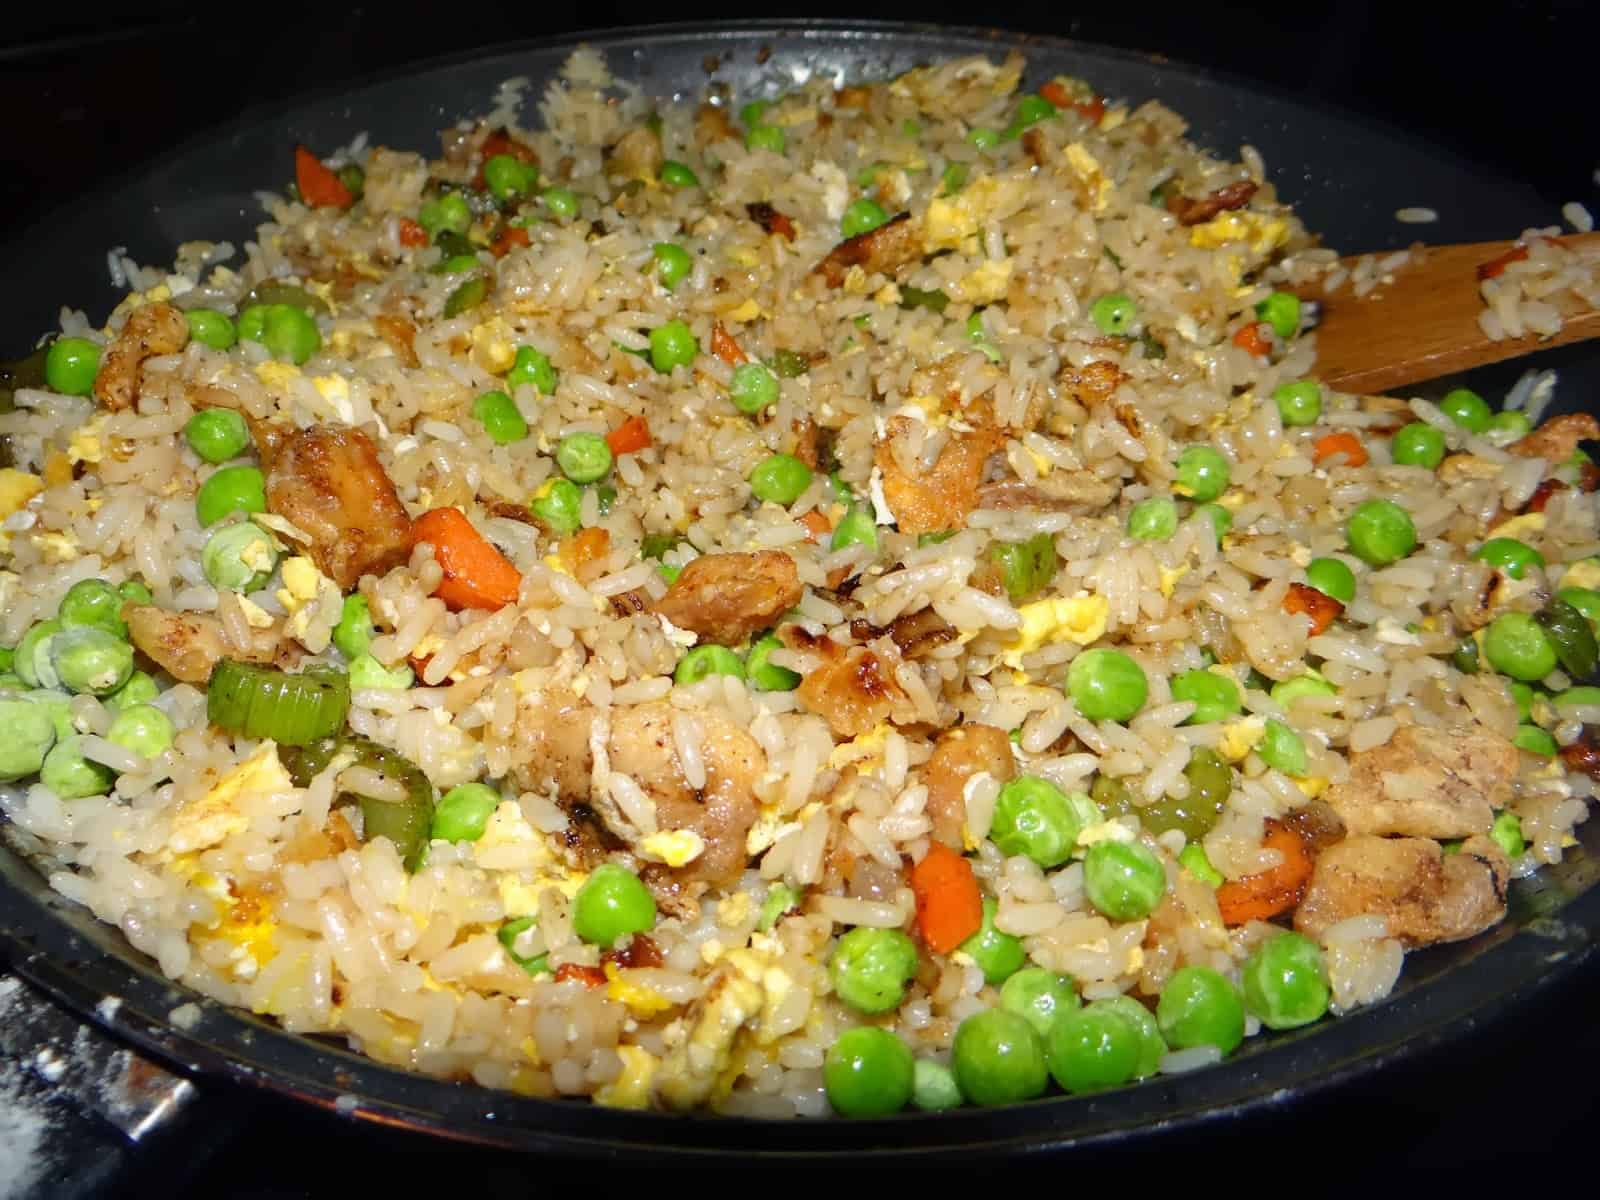 Homemade fried rice